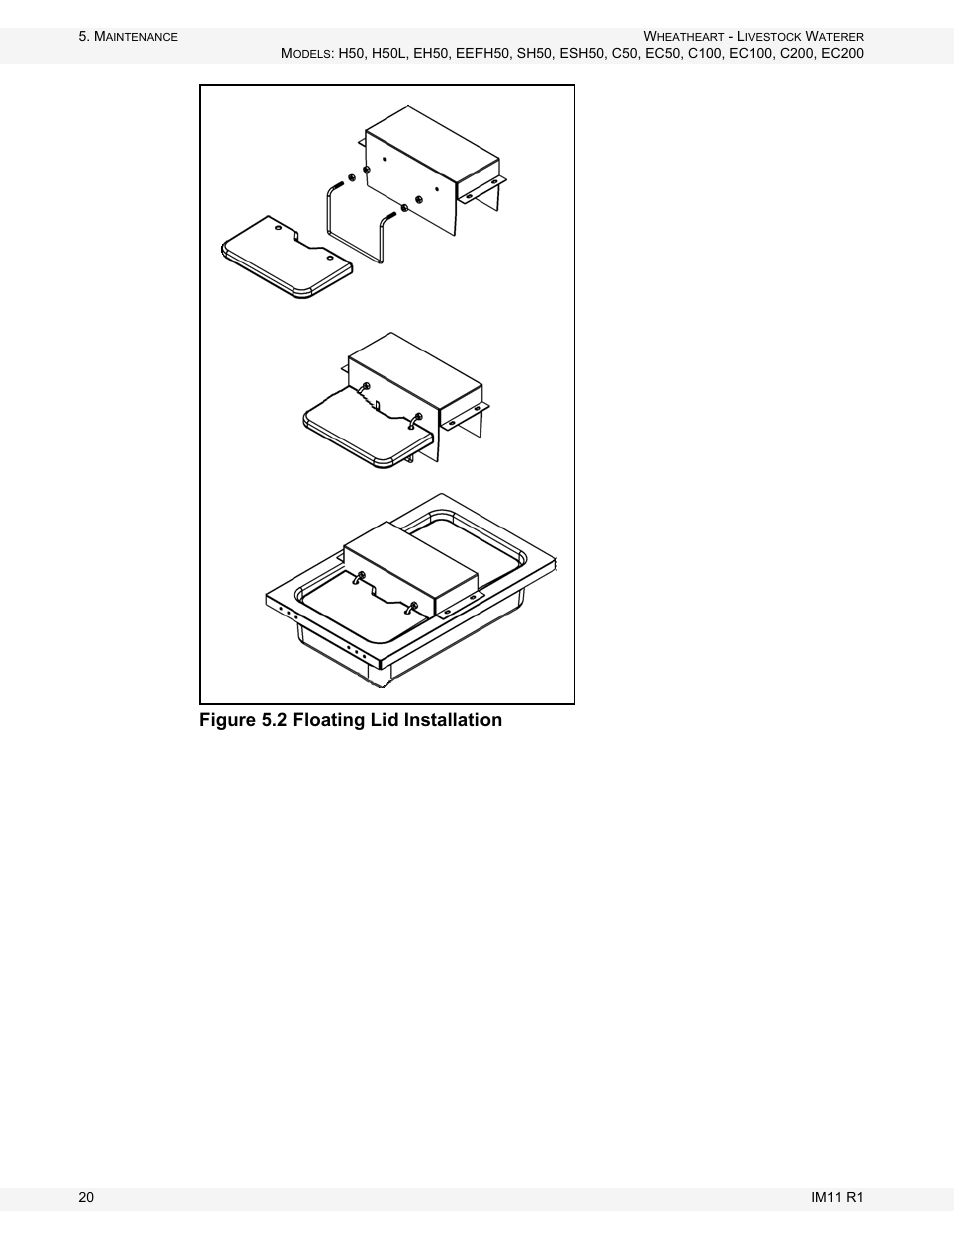 Figure 5.2 floating lid installation | Wheatheart Livestock Waterer User Manual | Page 20 / 28